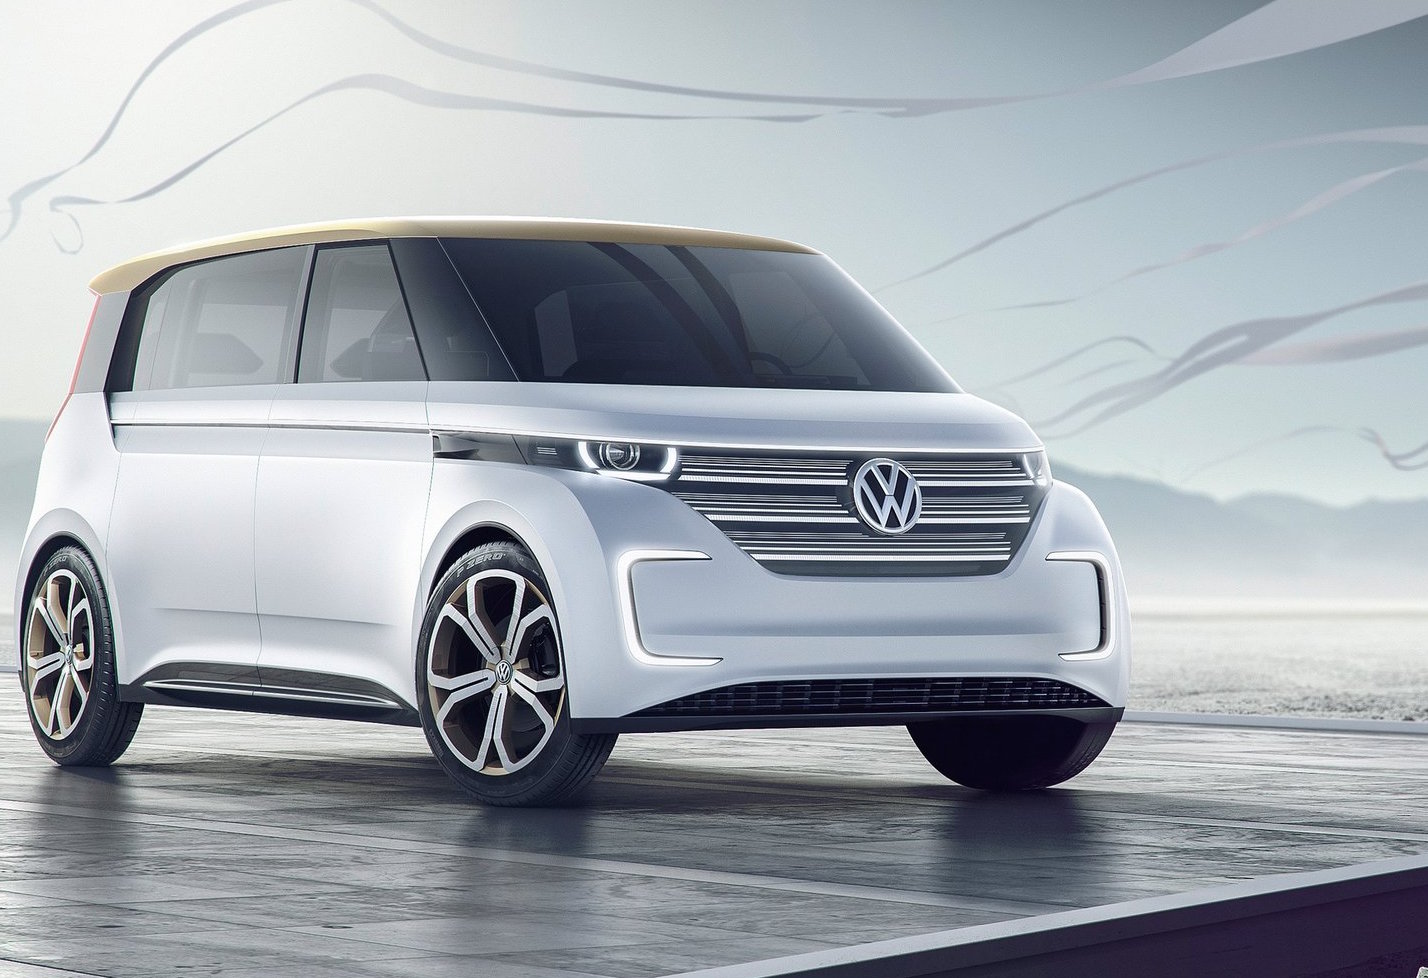 New Volkswagen Microbus EV in the works – report